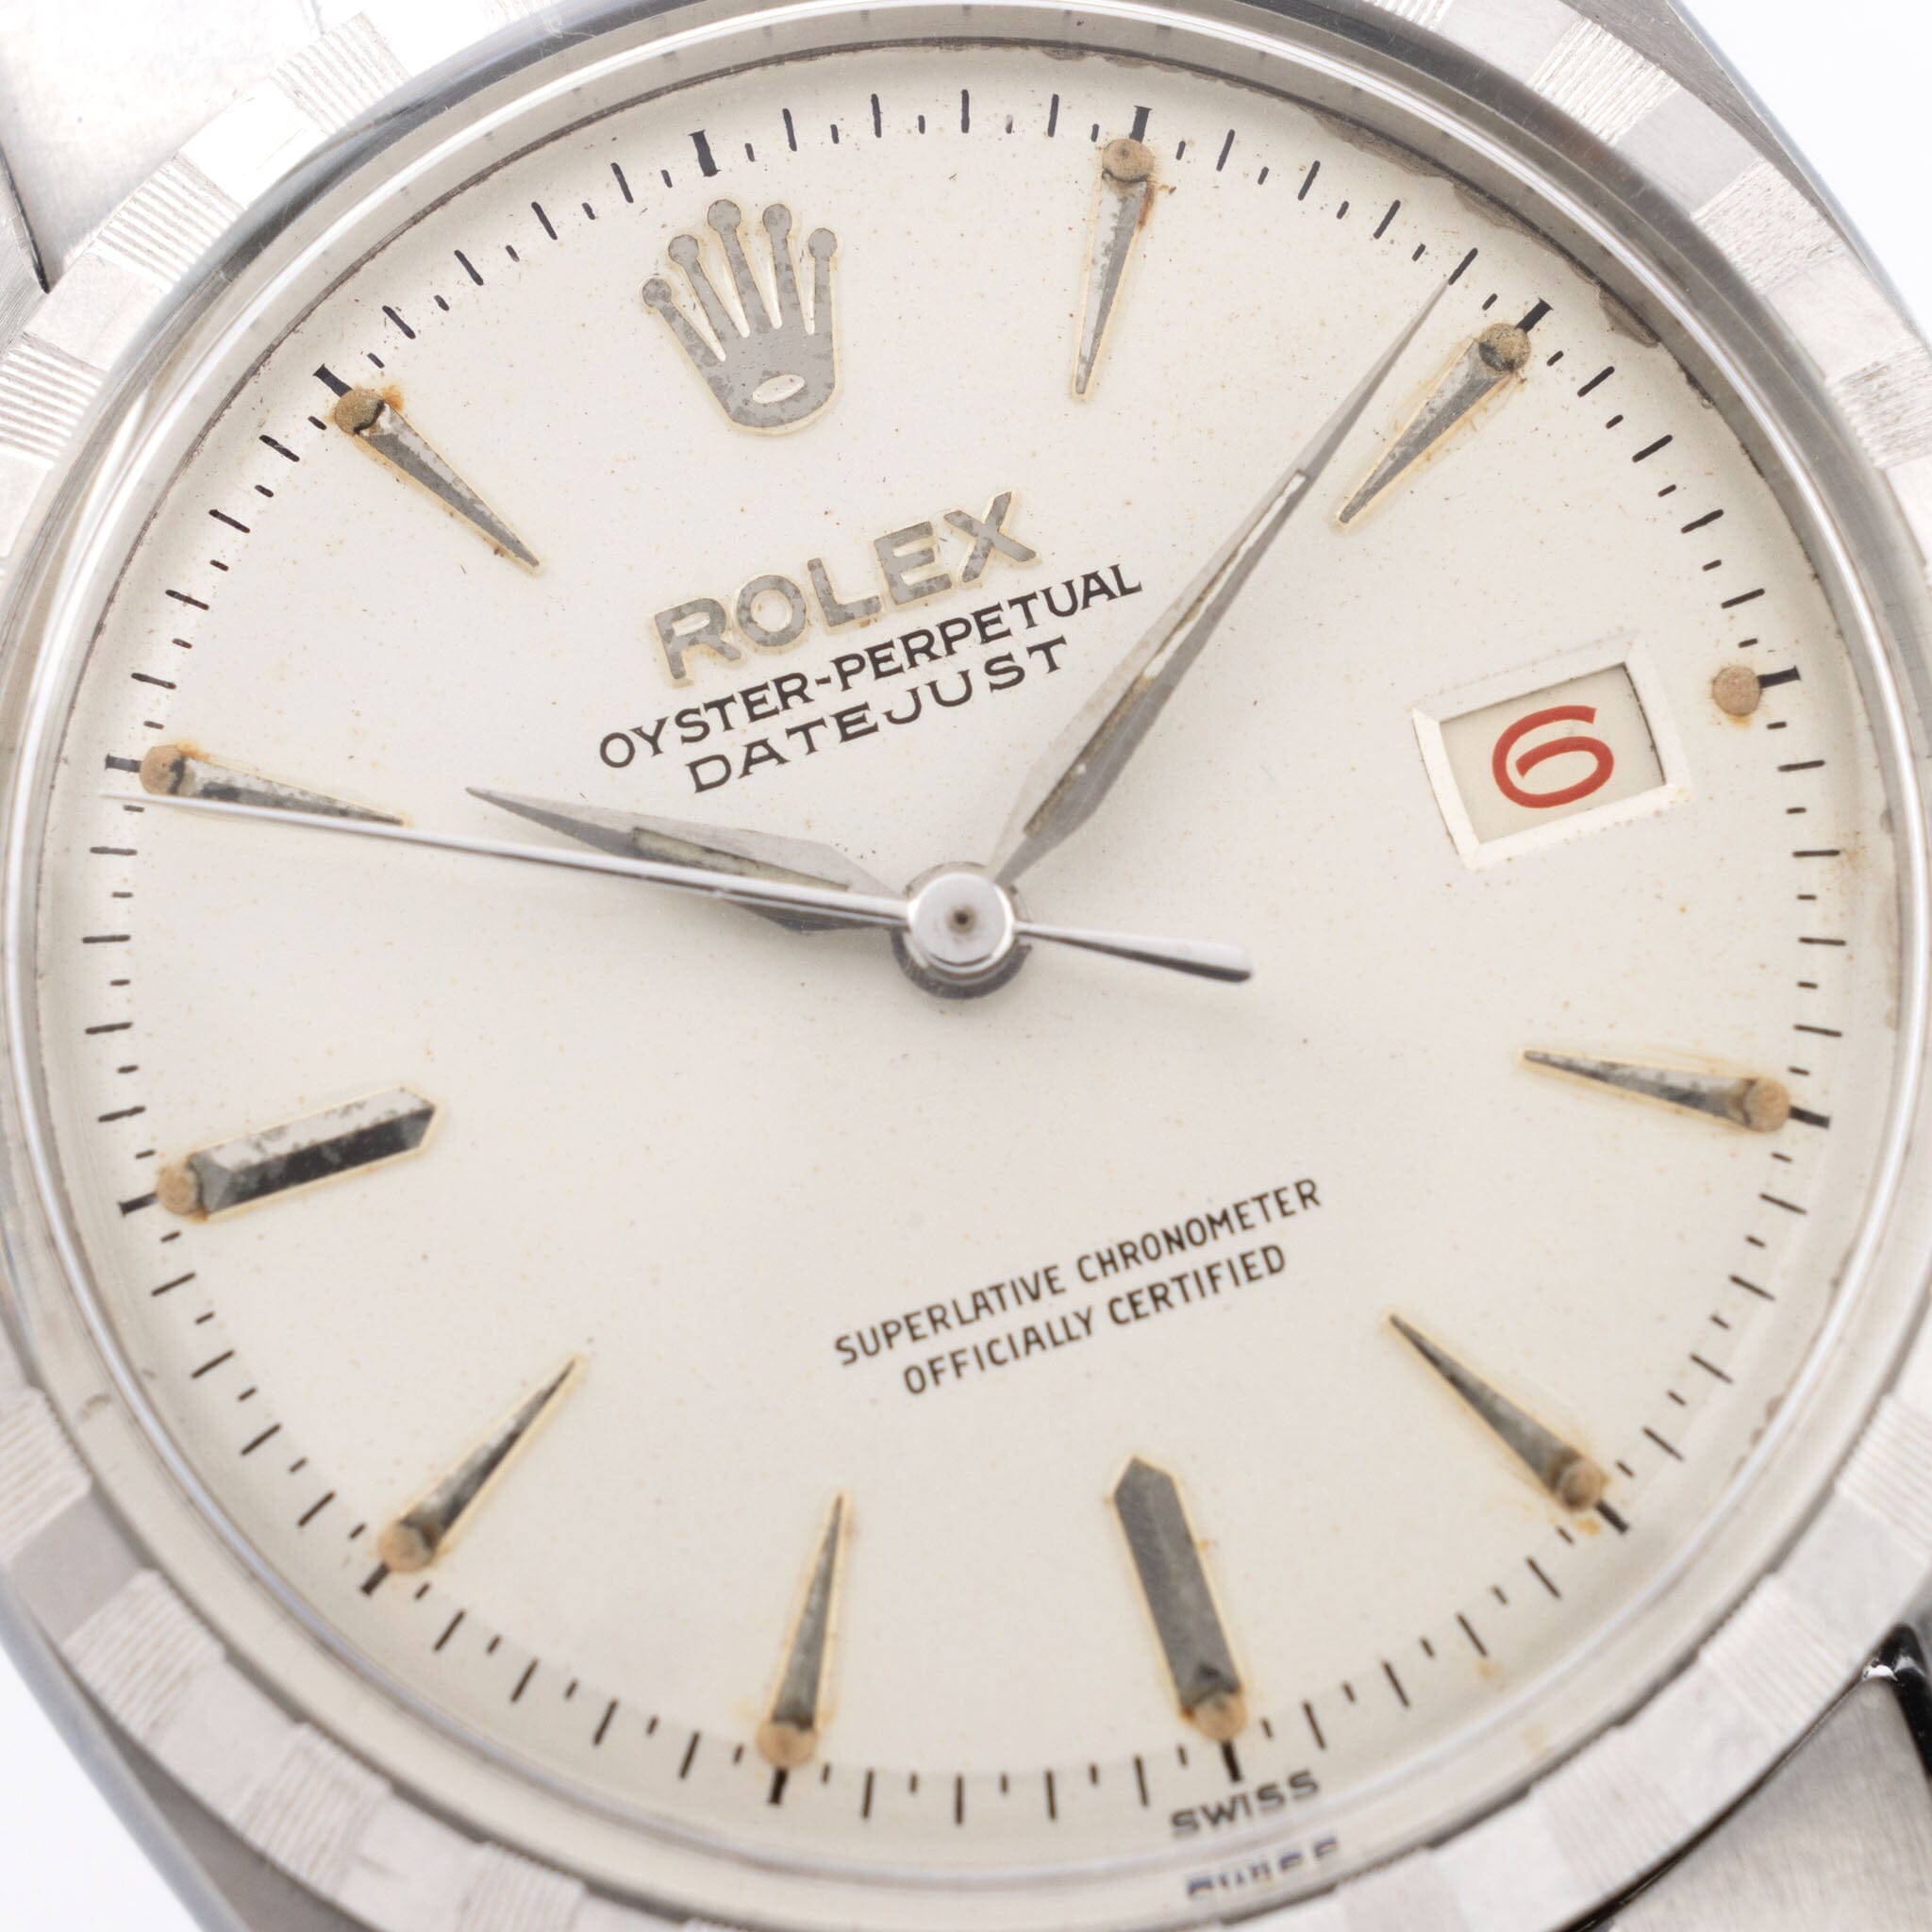 Connoisseurs Jewelry Cleaner Silver - Saltzman's Watches